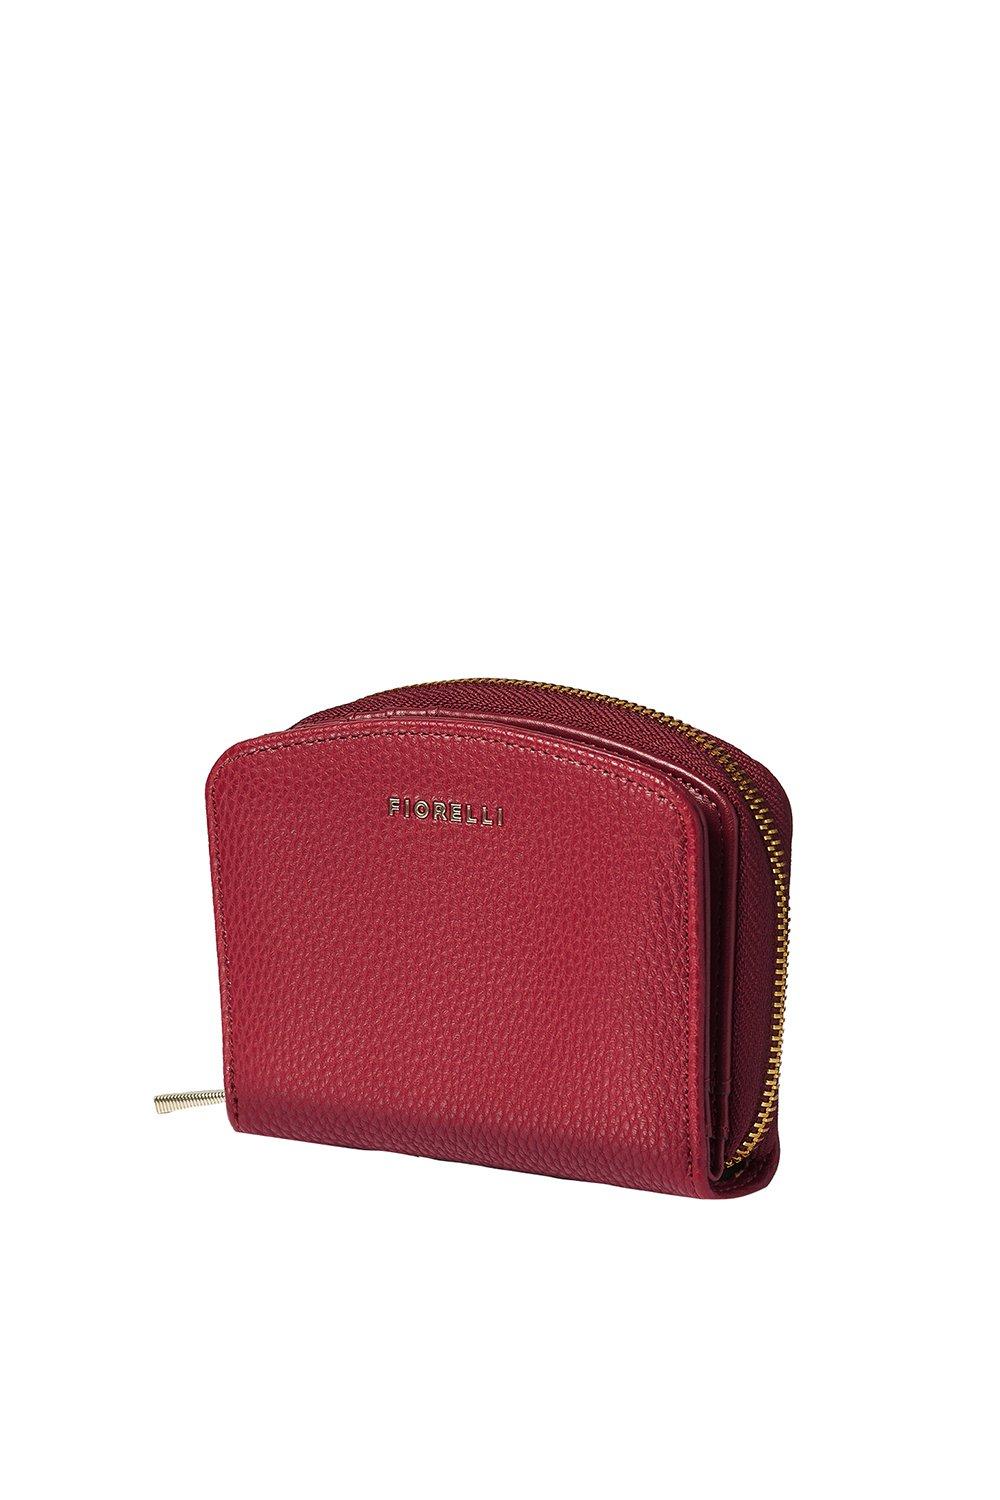 Fiorelli | Fiorelli Bags, Backpacks, Handbags & Purses | Sports Direct